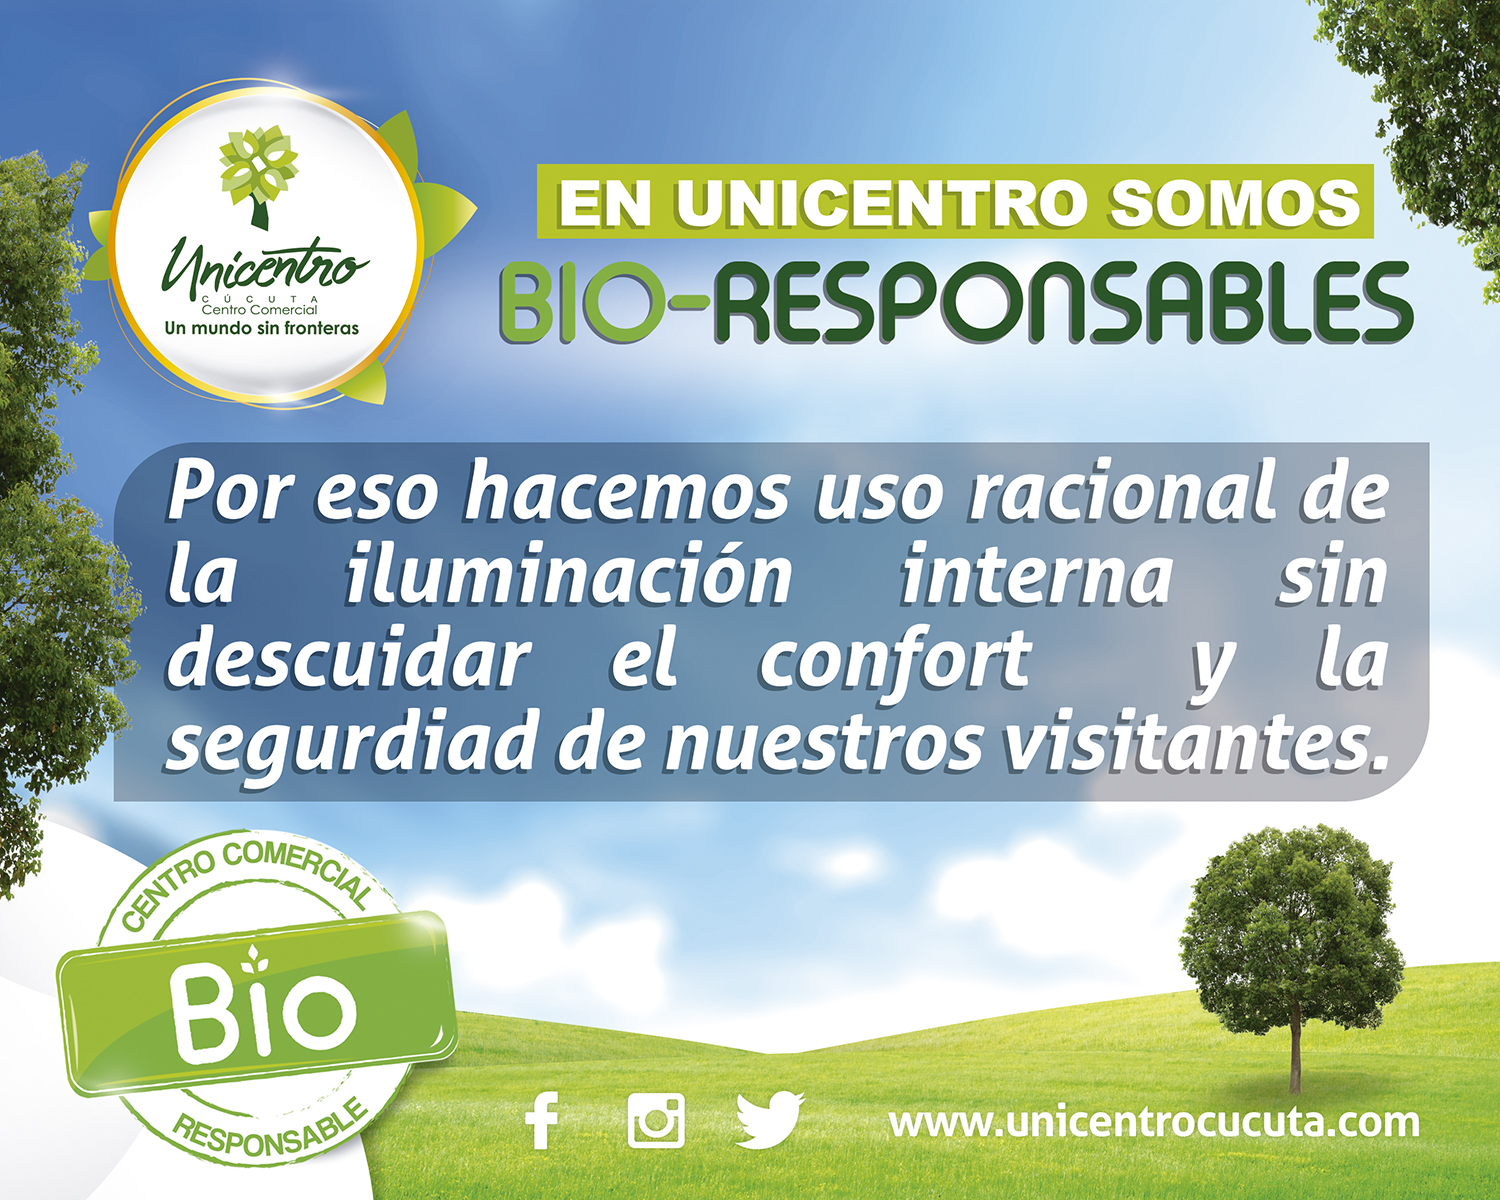 Unicentro Bioresponsable